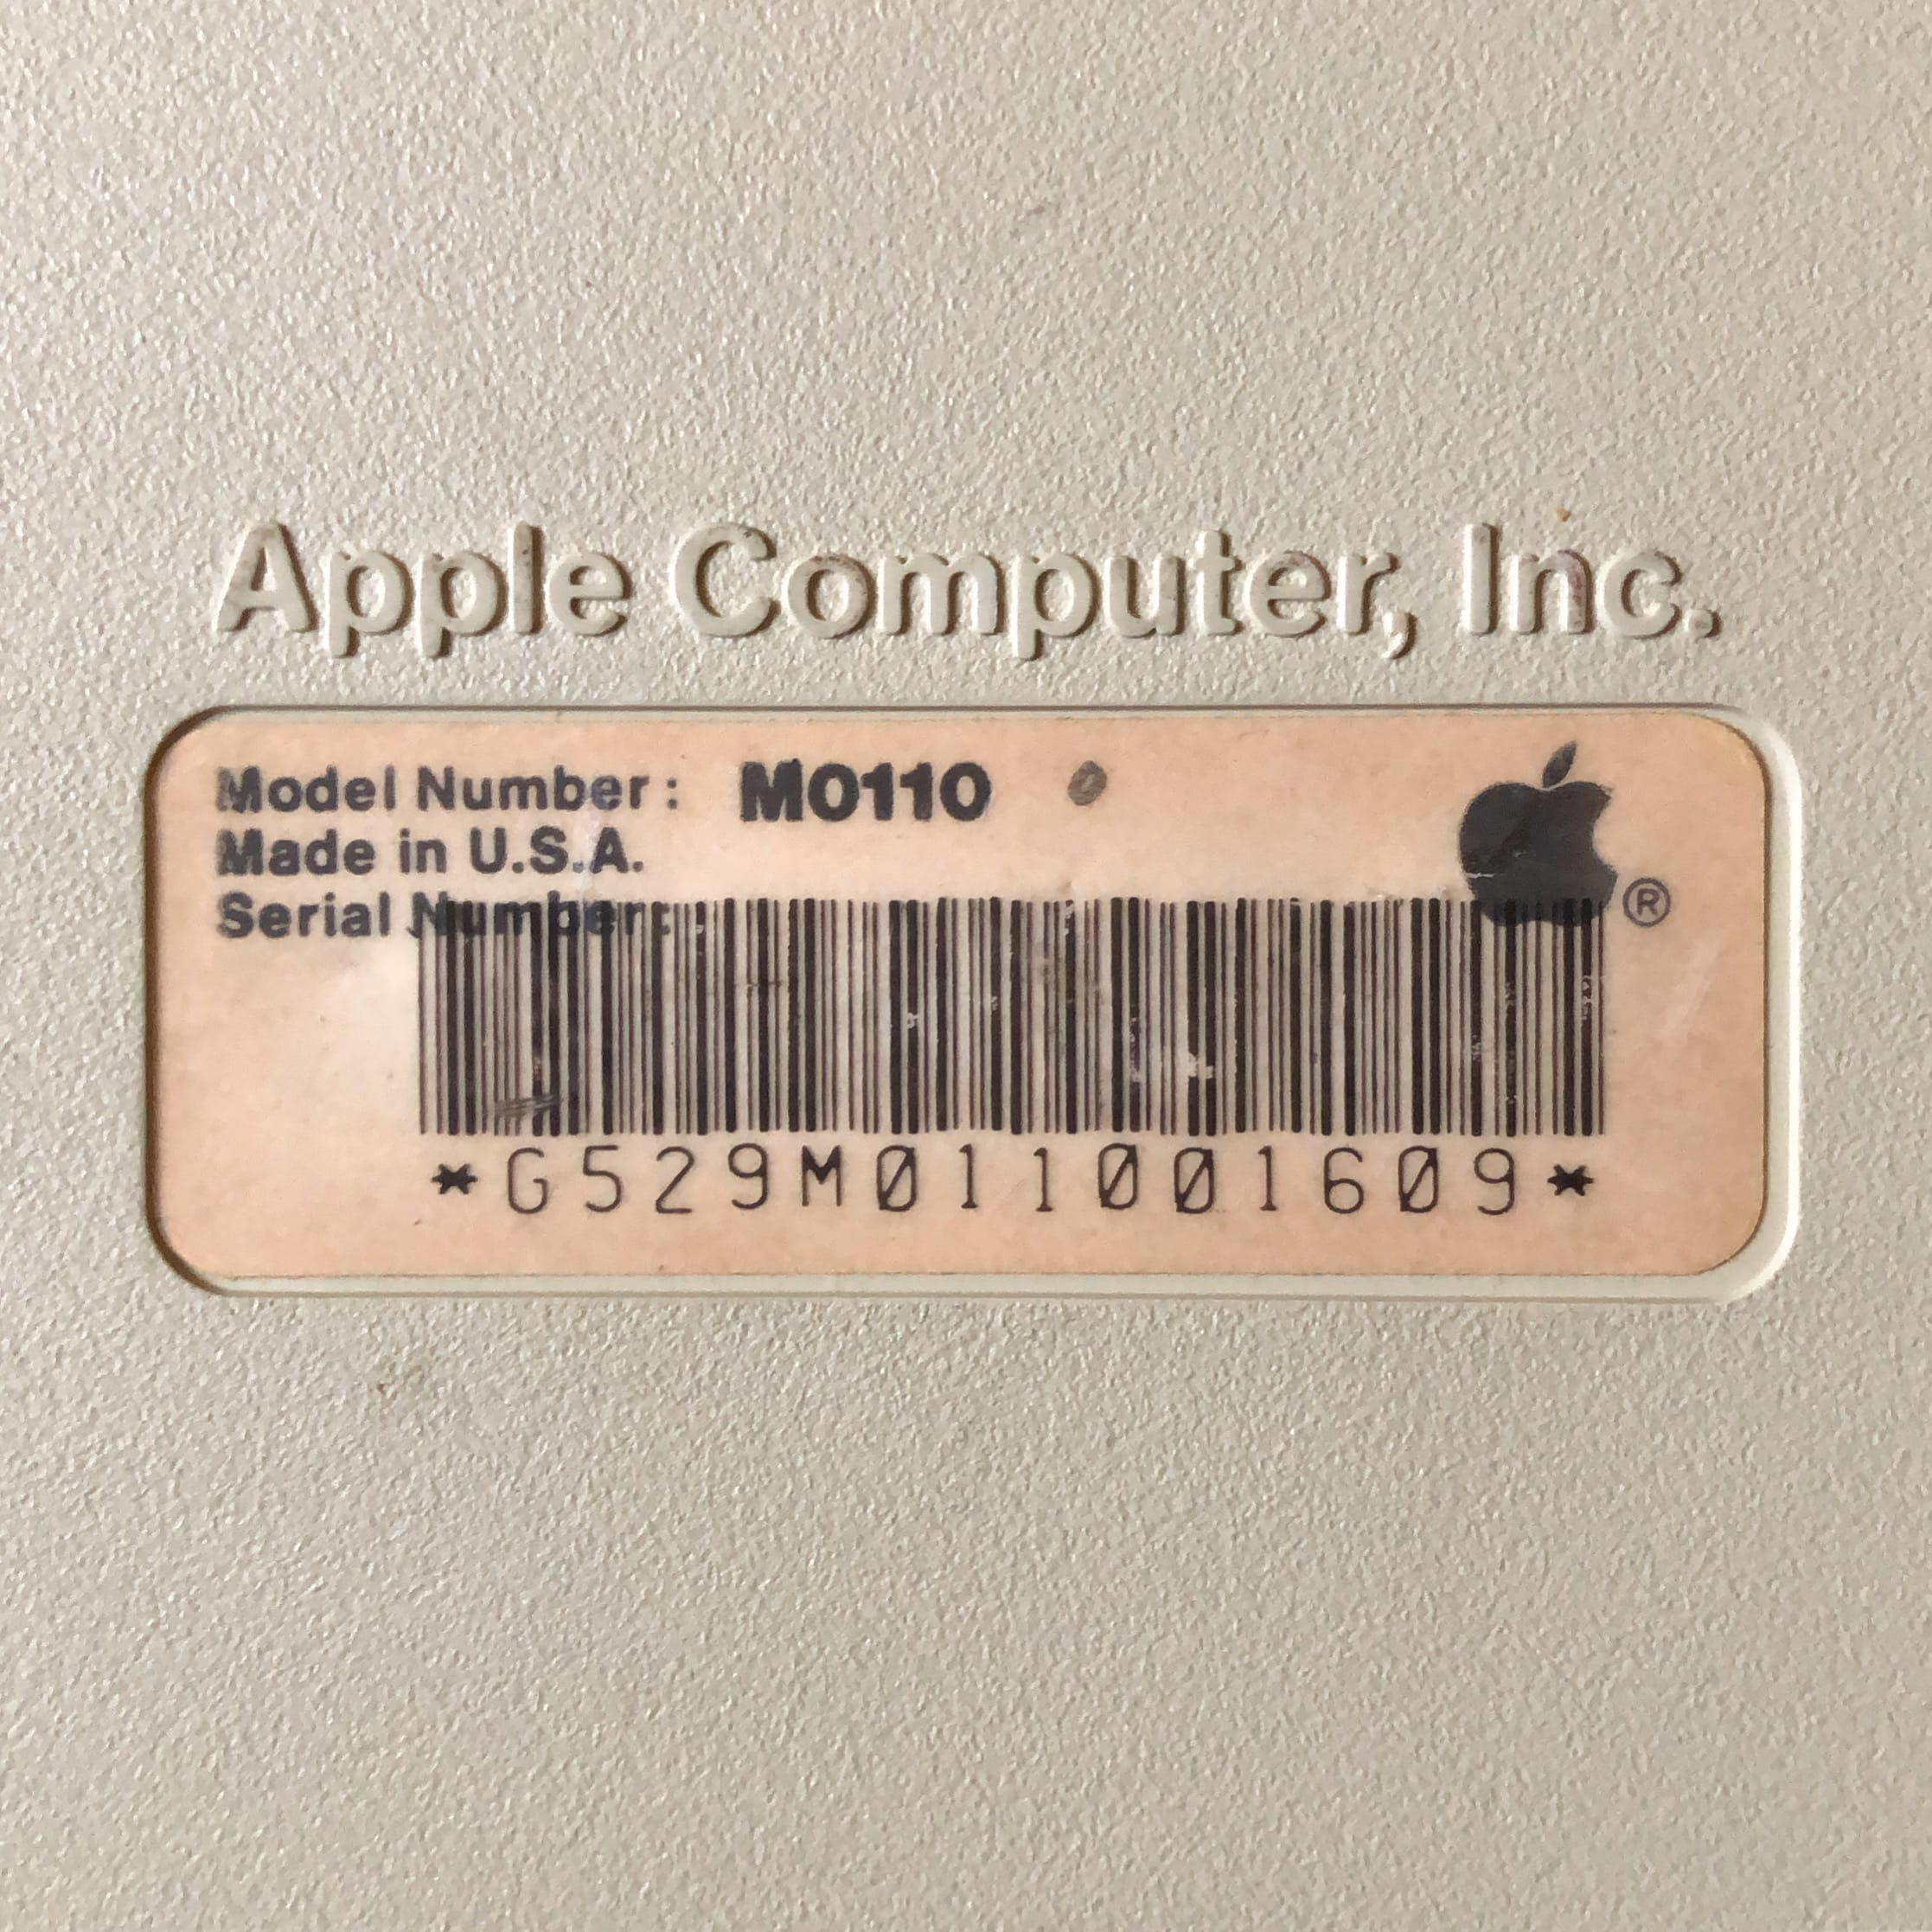 Apple Computer Inc barcode on the original Macintosh keyboard